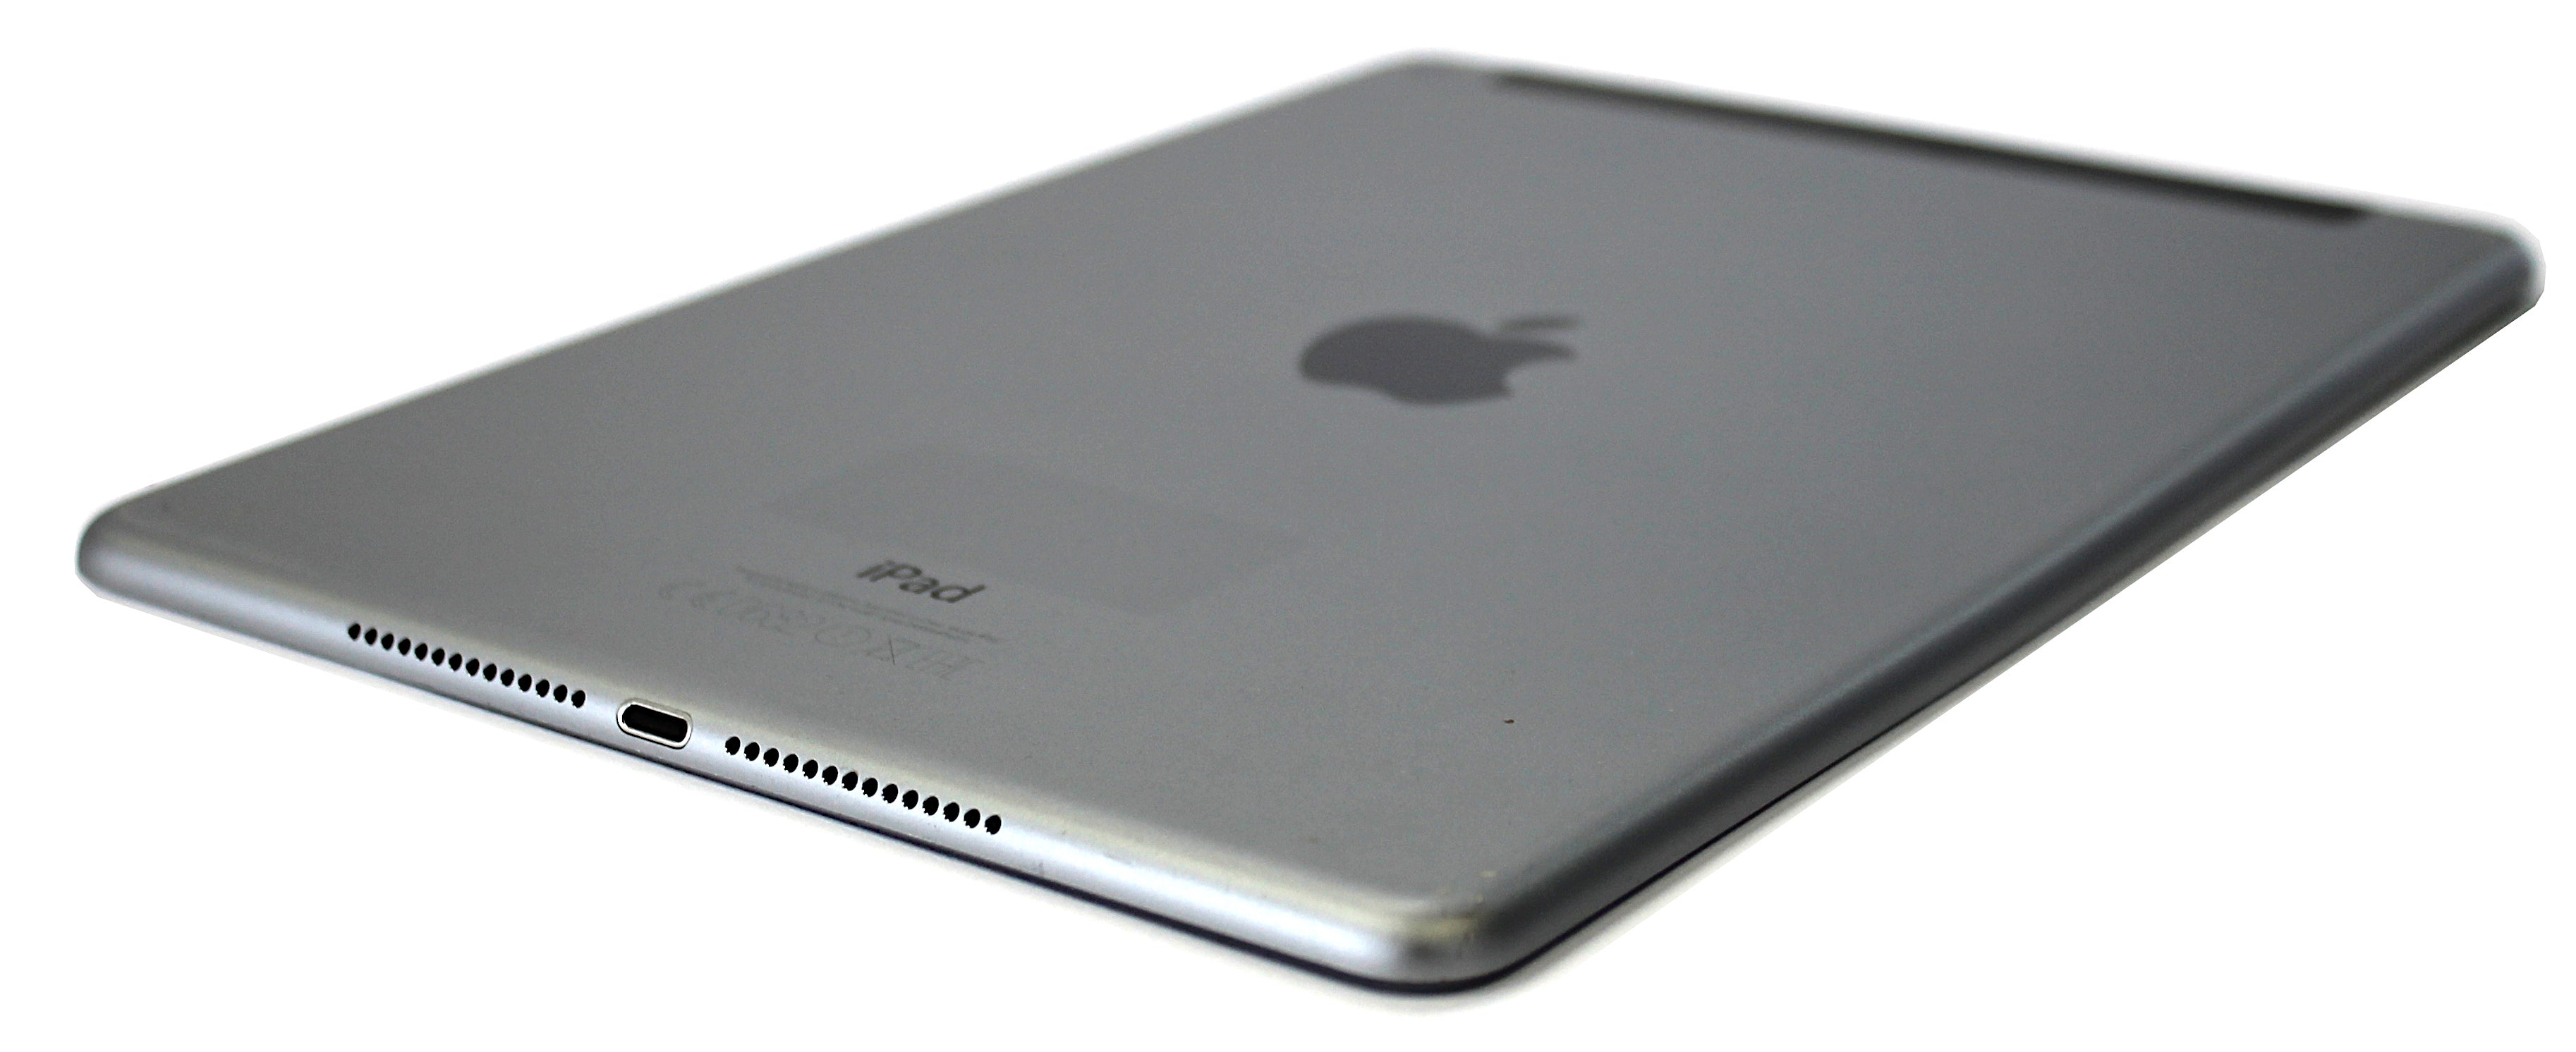 Apple iPad Air 2 Tablet, 64GB, WiFi + GSM, Space Grey, A1567